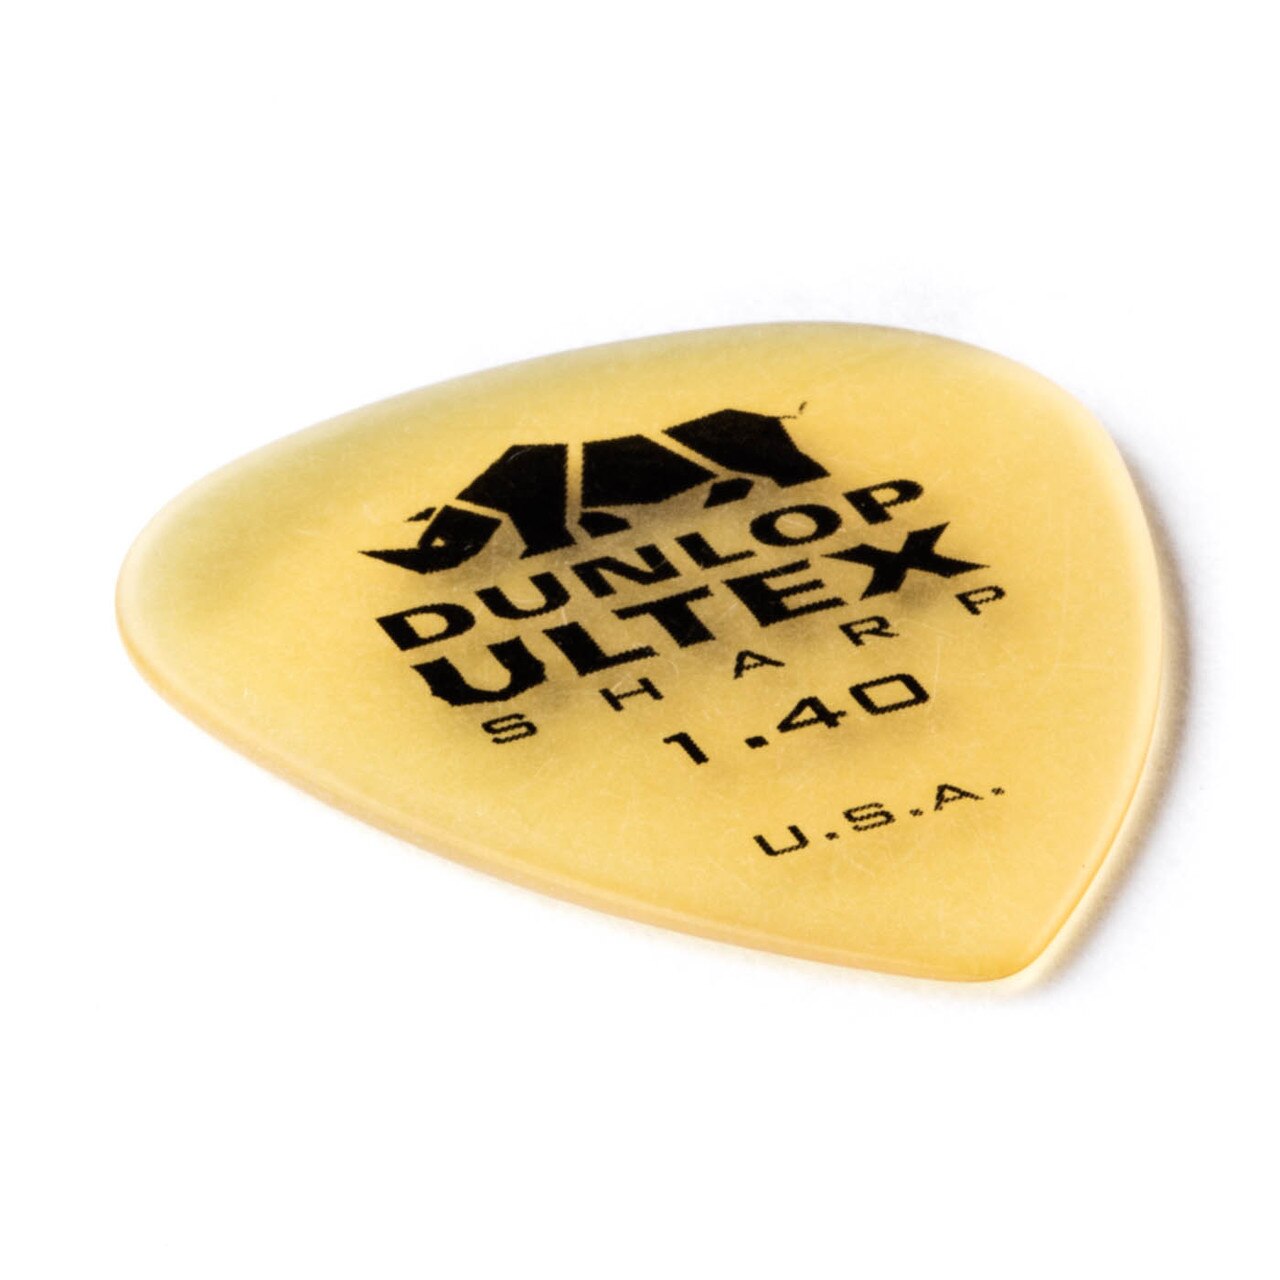 Jim Dunlop Ultex Sharp 433 1.40mm - Guitar pick - Variation 1